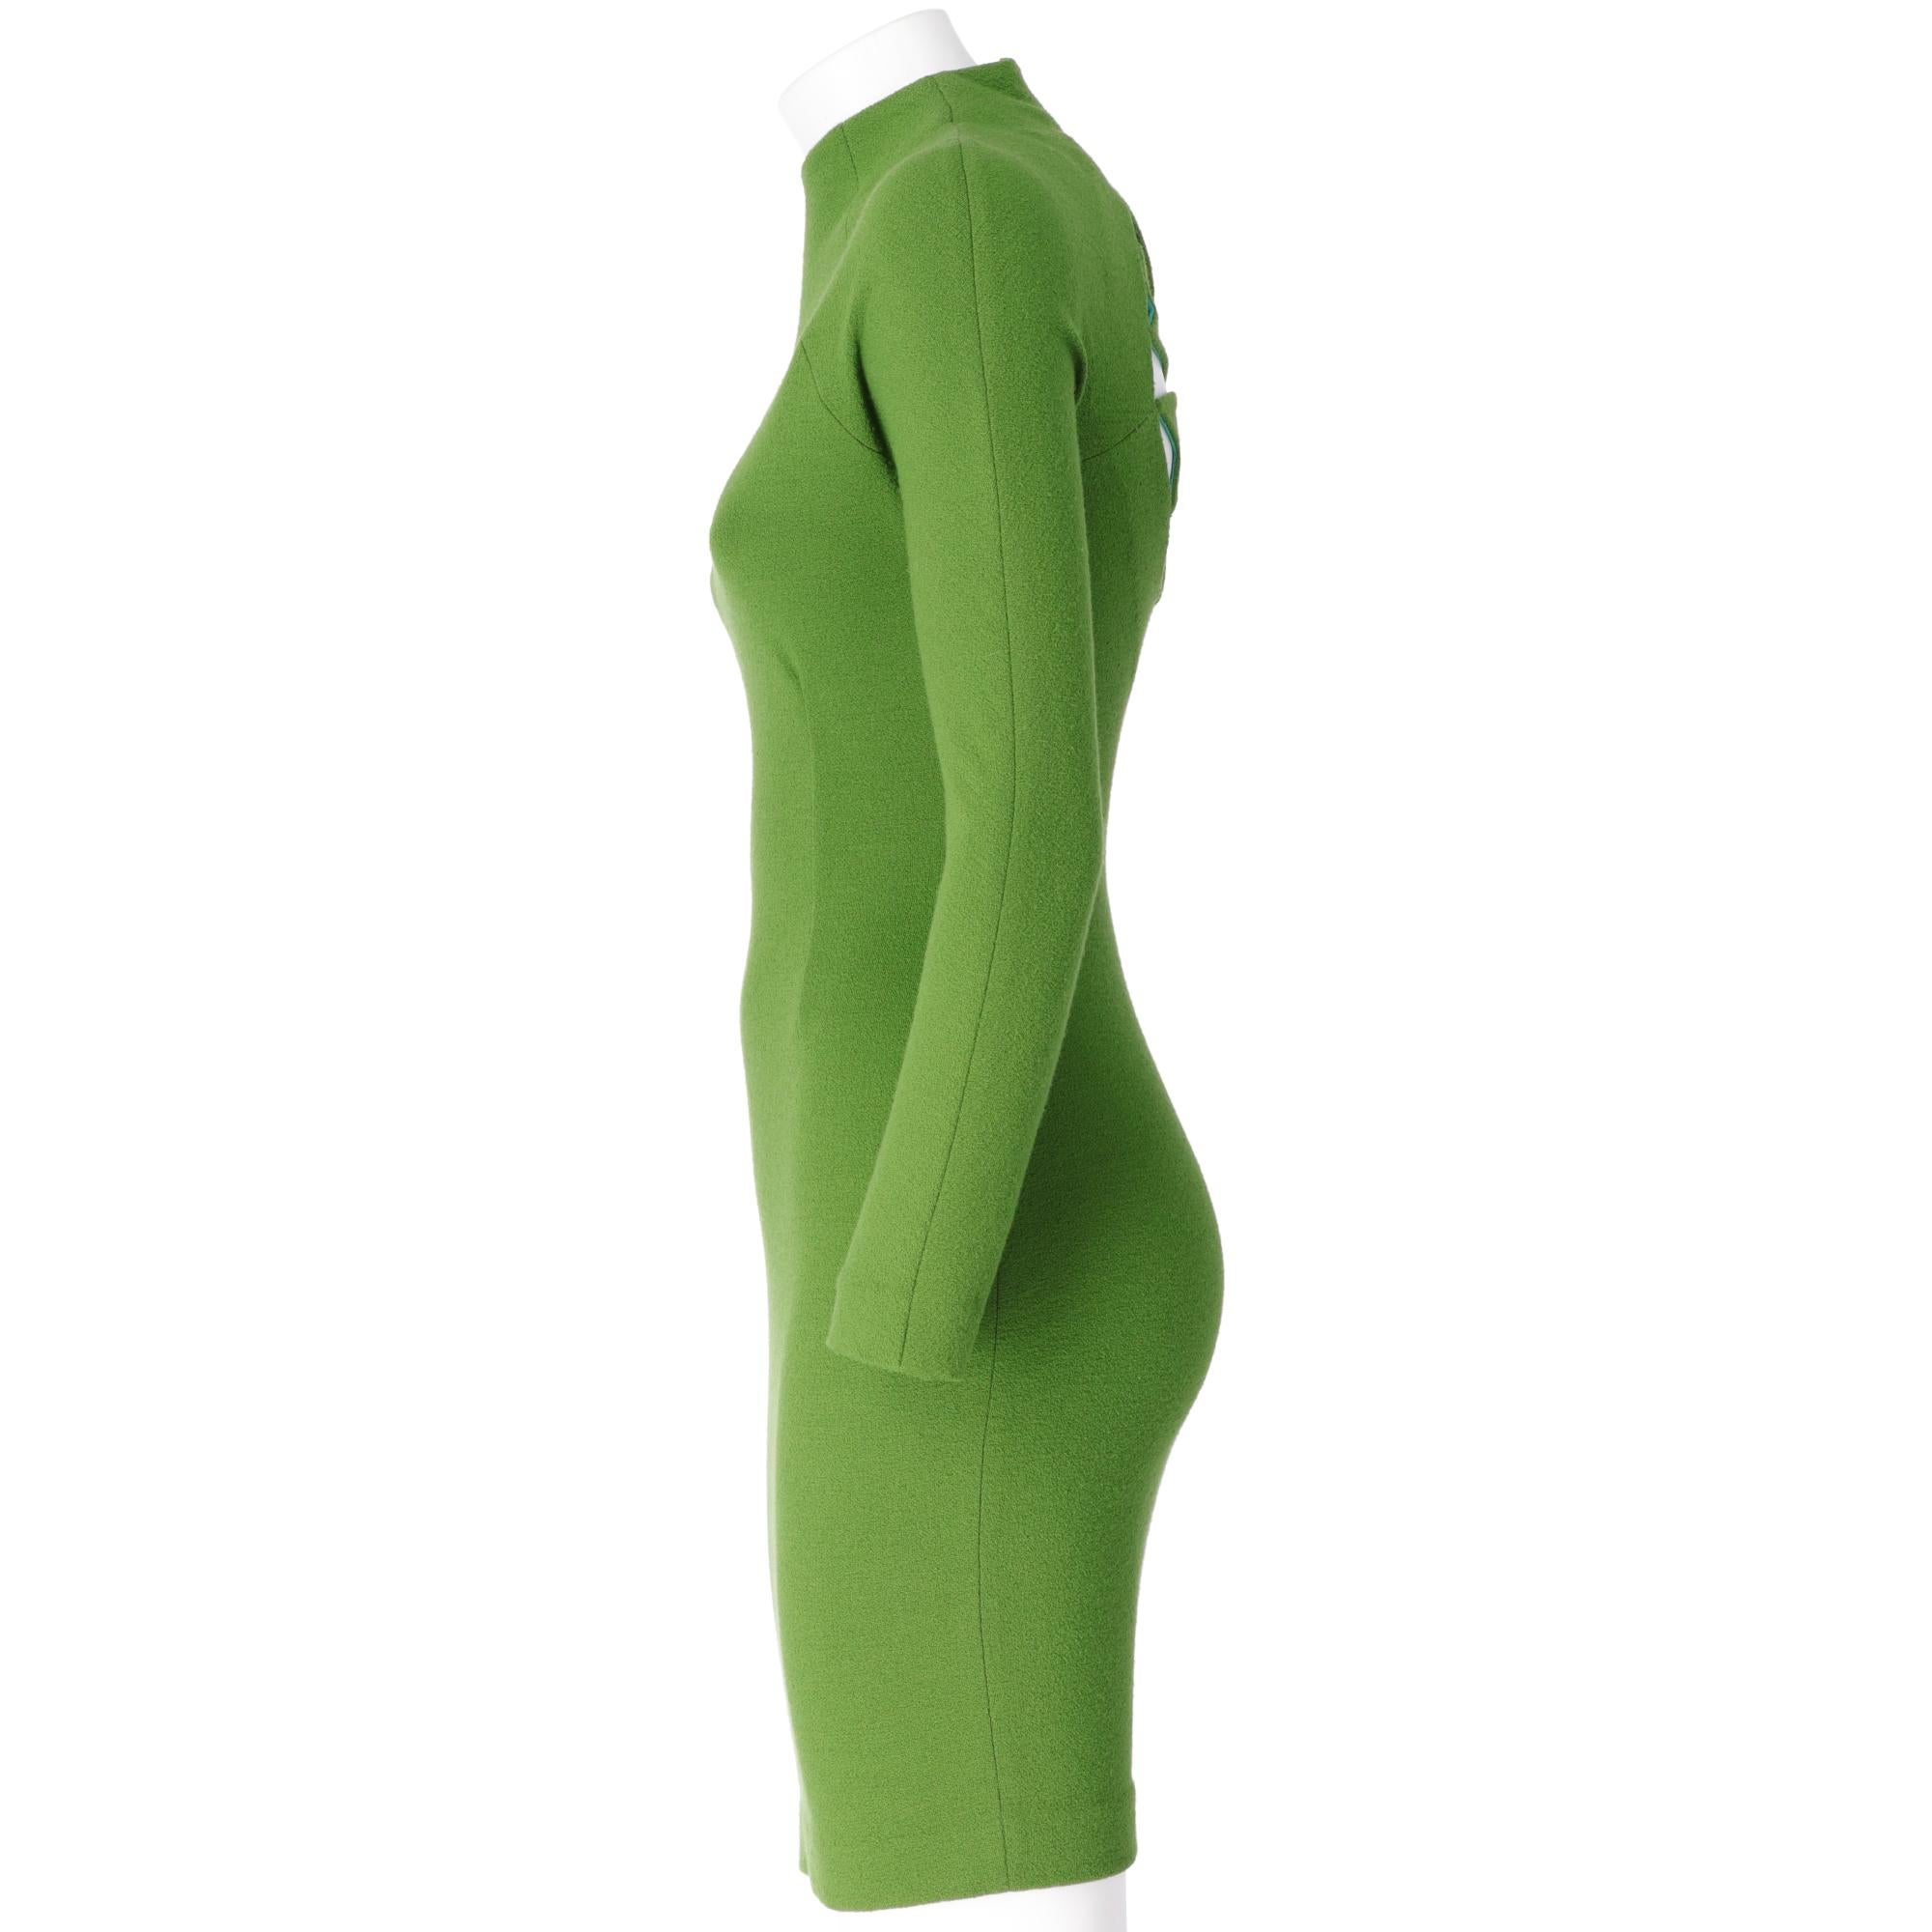 pea green clothing